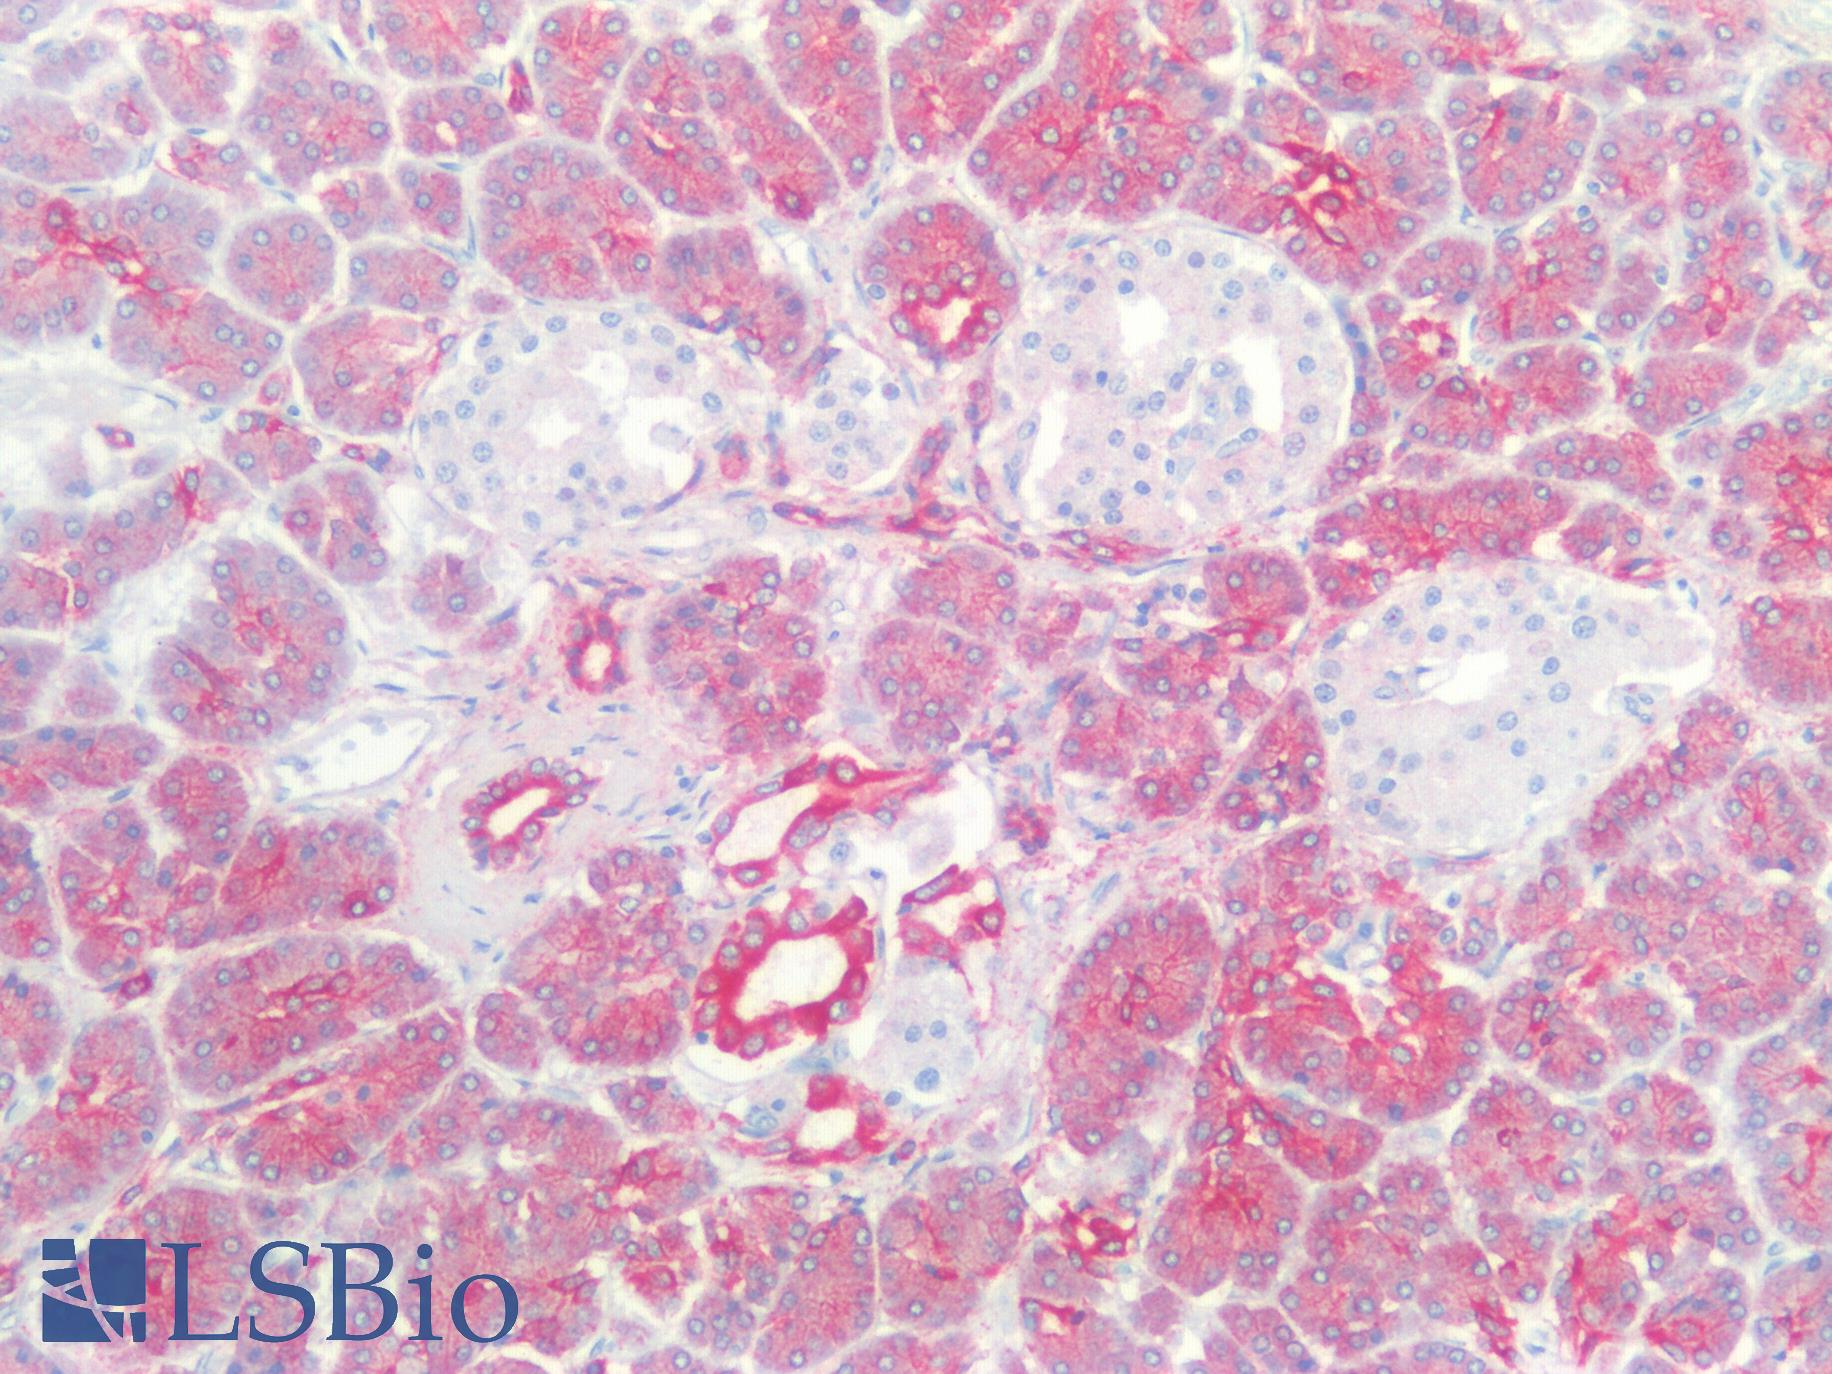 KRT18 / CK18 / Cytokeratin 18 Antibody - Human Pancreas: Formalin-Fixed, Paraffin-Embedded (FFPE)